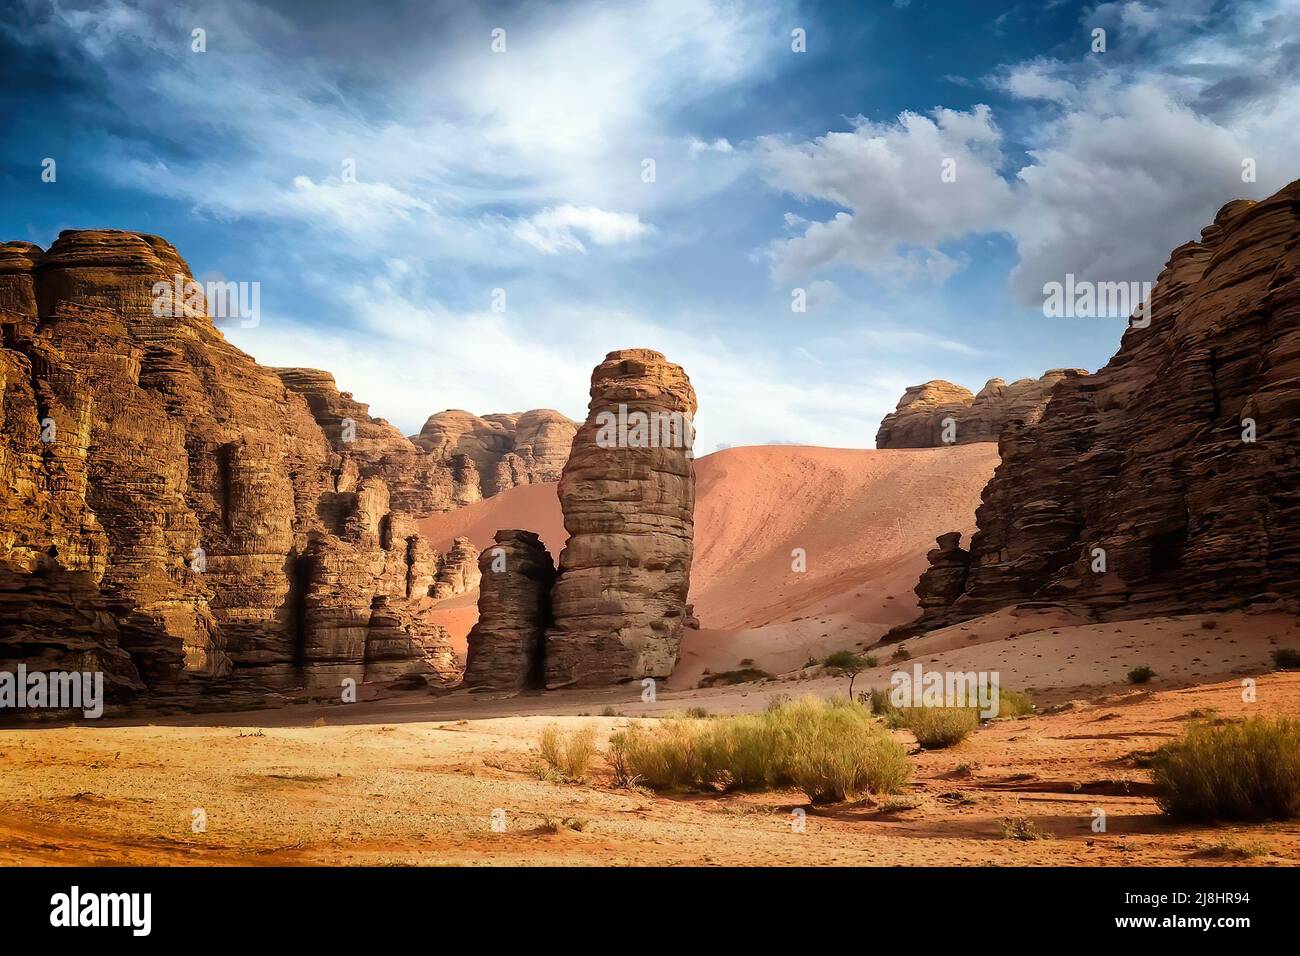 Reise durch die Wüste und die Berge. Al Ula, Saudi-Arabien. Stockfoto